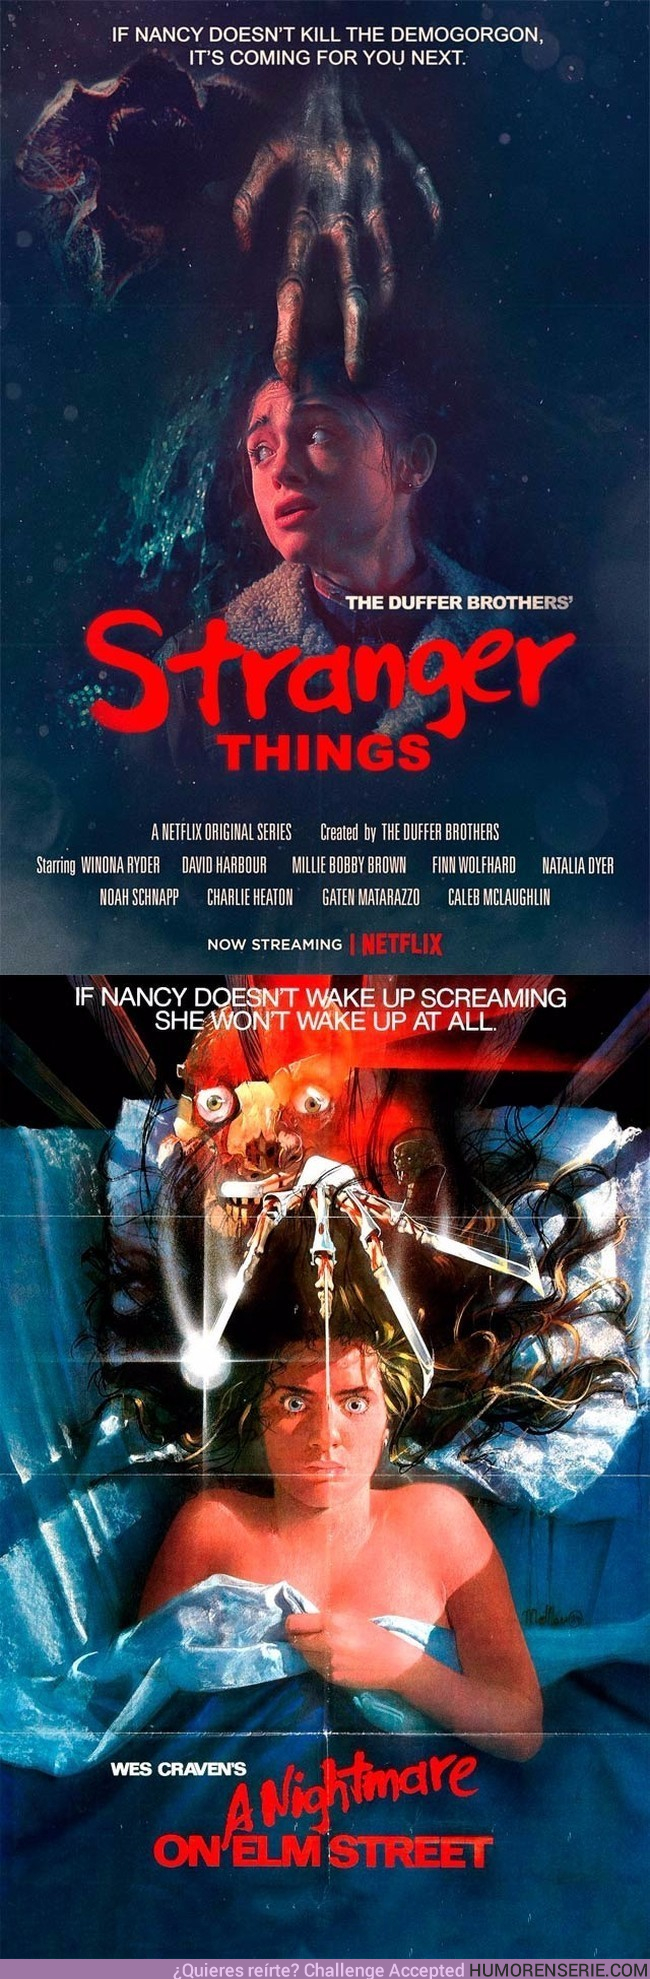 16729 - El nuevo póster de Stranger Things rinde homenaje a Pesadilla en Elm Street